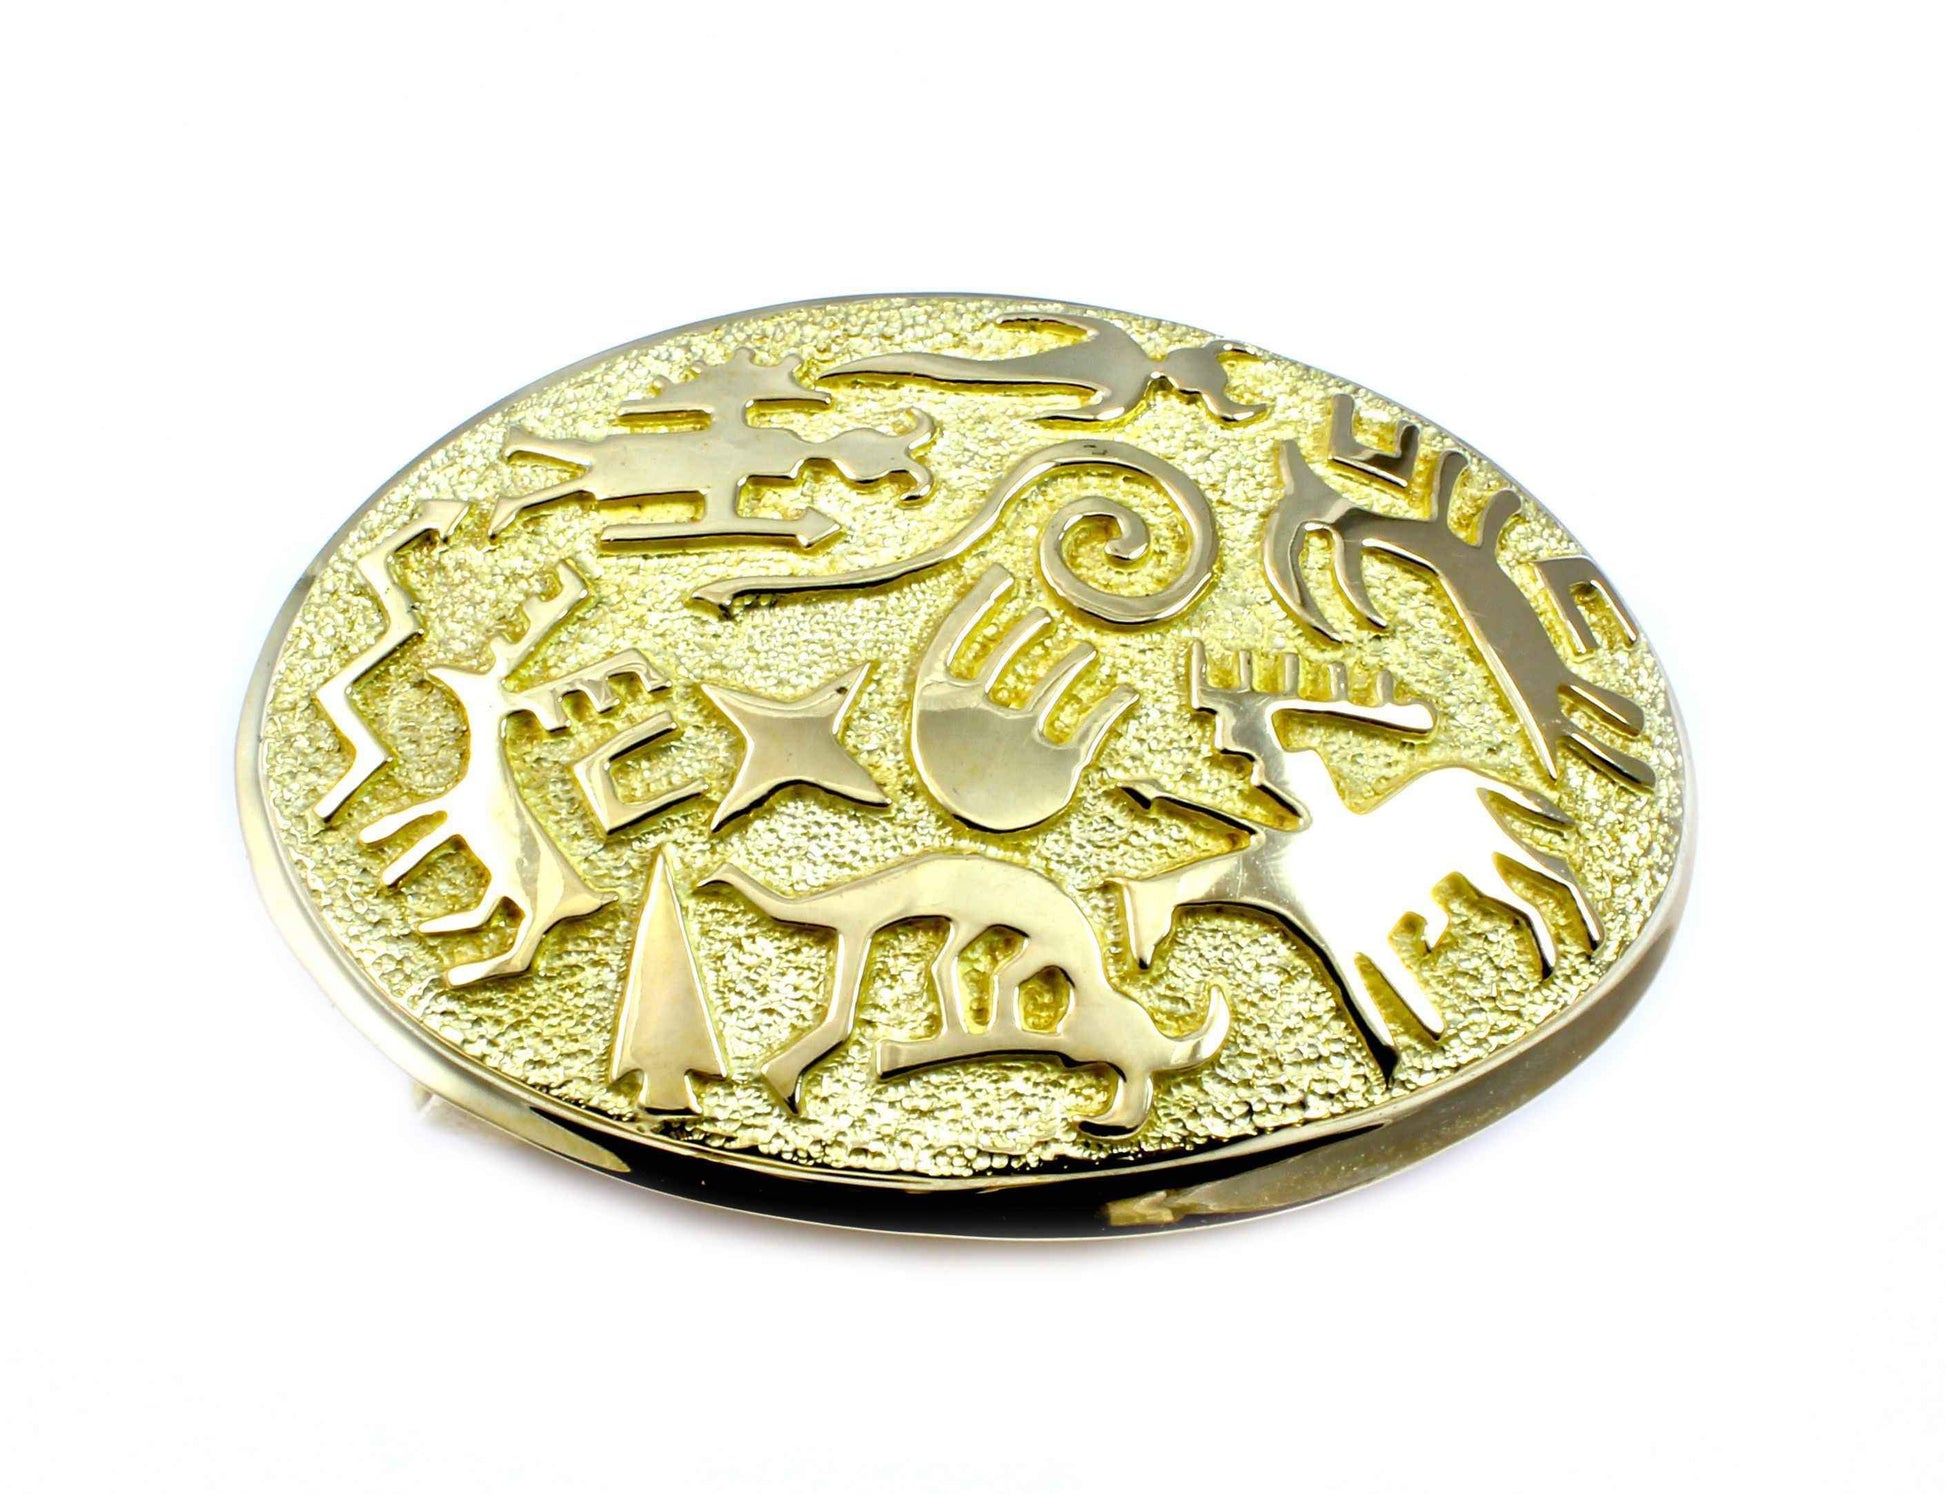 Ben Nighthorse-Rock Art Oval Gold Buckle-Sorrel Sky Gallery-Jewelry